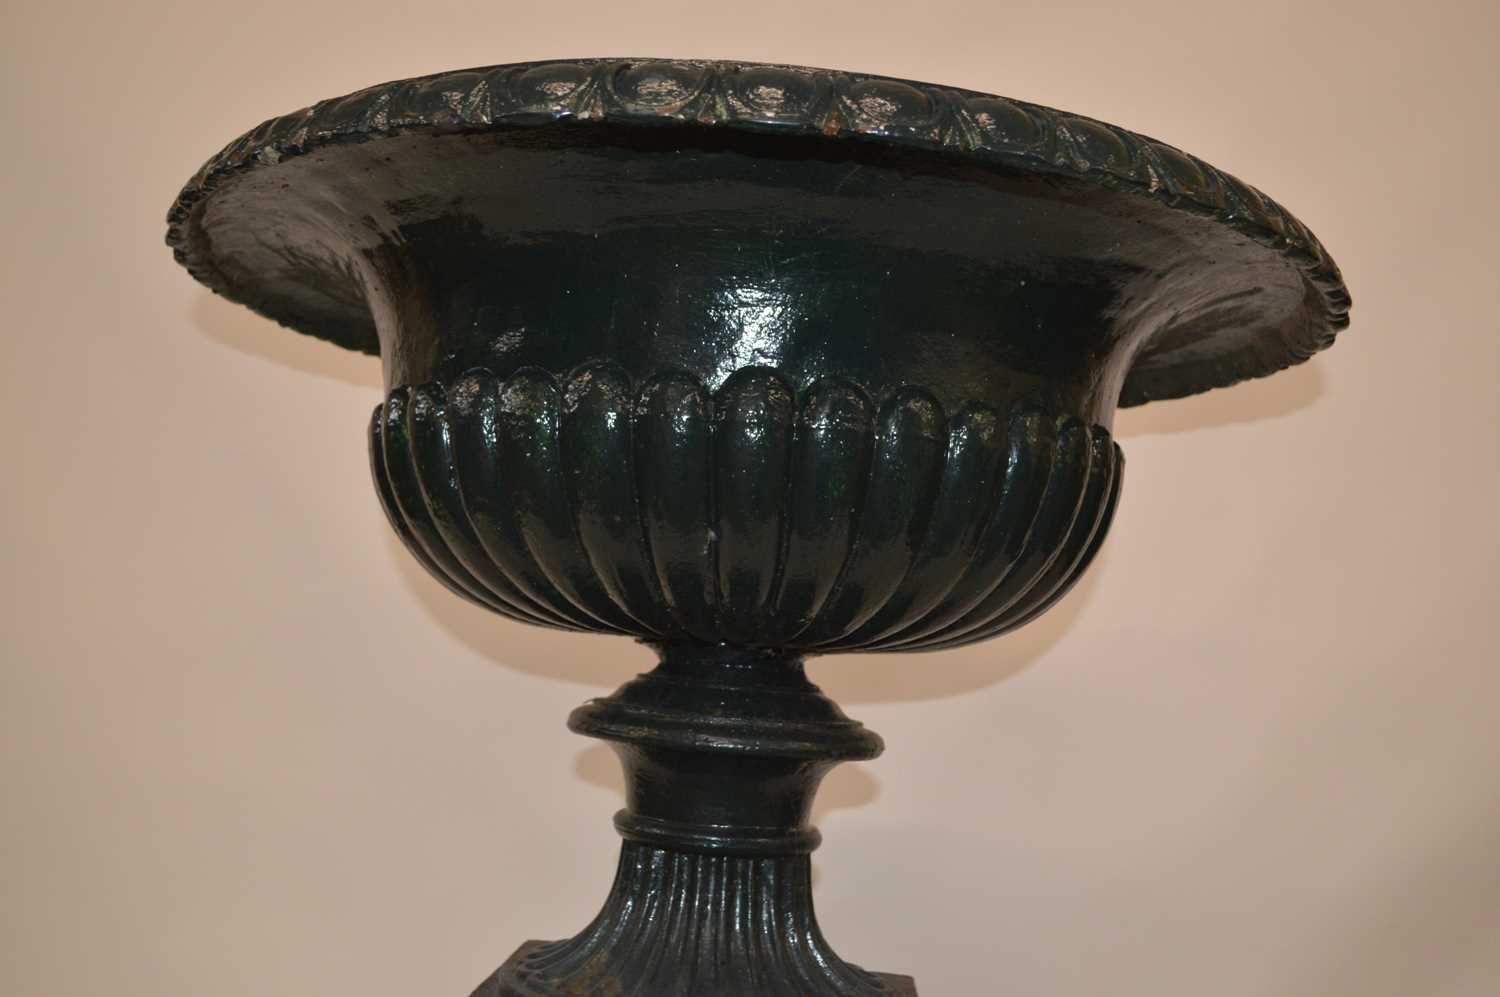 Late 19th-century cast iron garden urn - Image 3 of 3